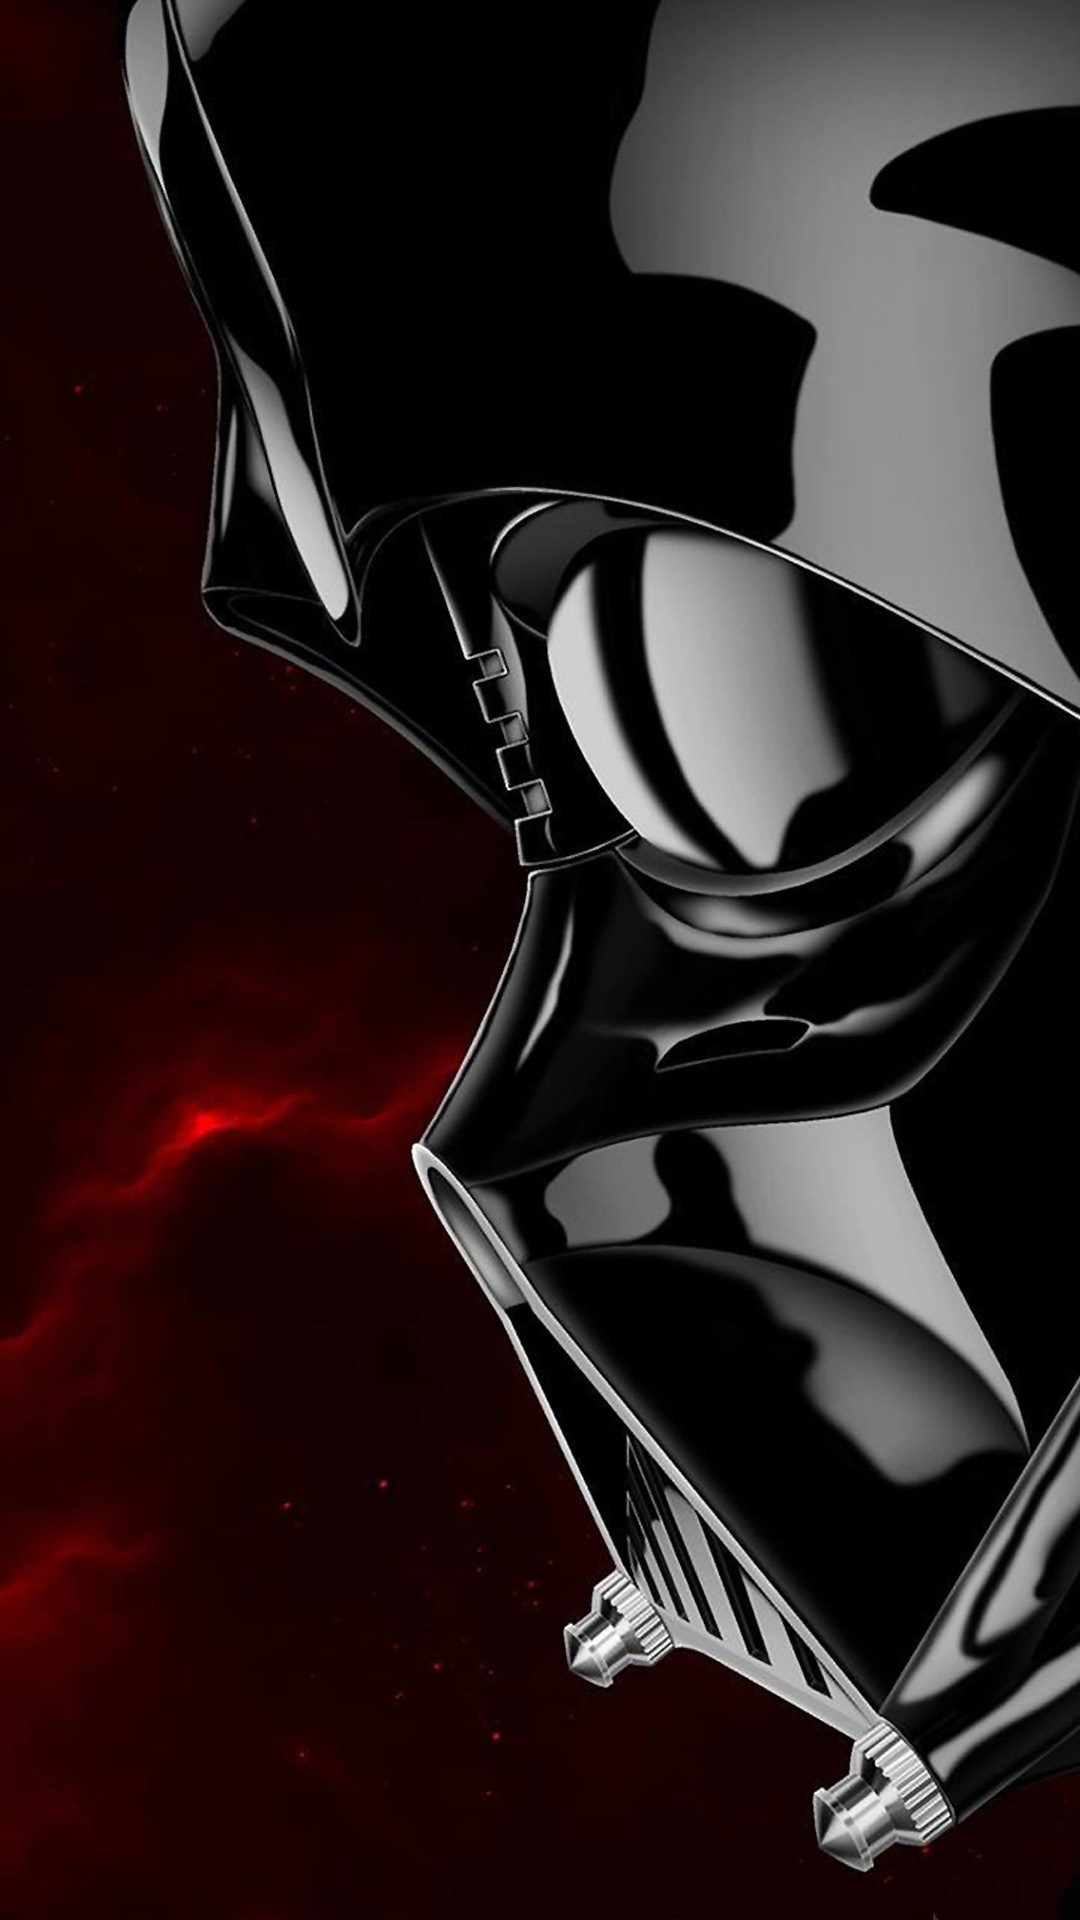 Darth Vader Star Wars Illustration iPhone Plus HD Wallpaper Ipod